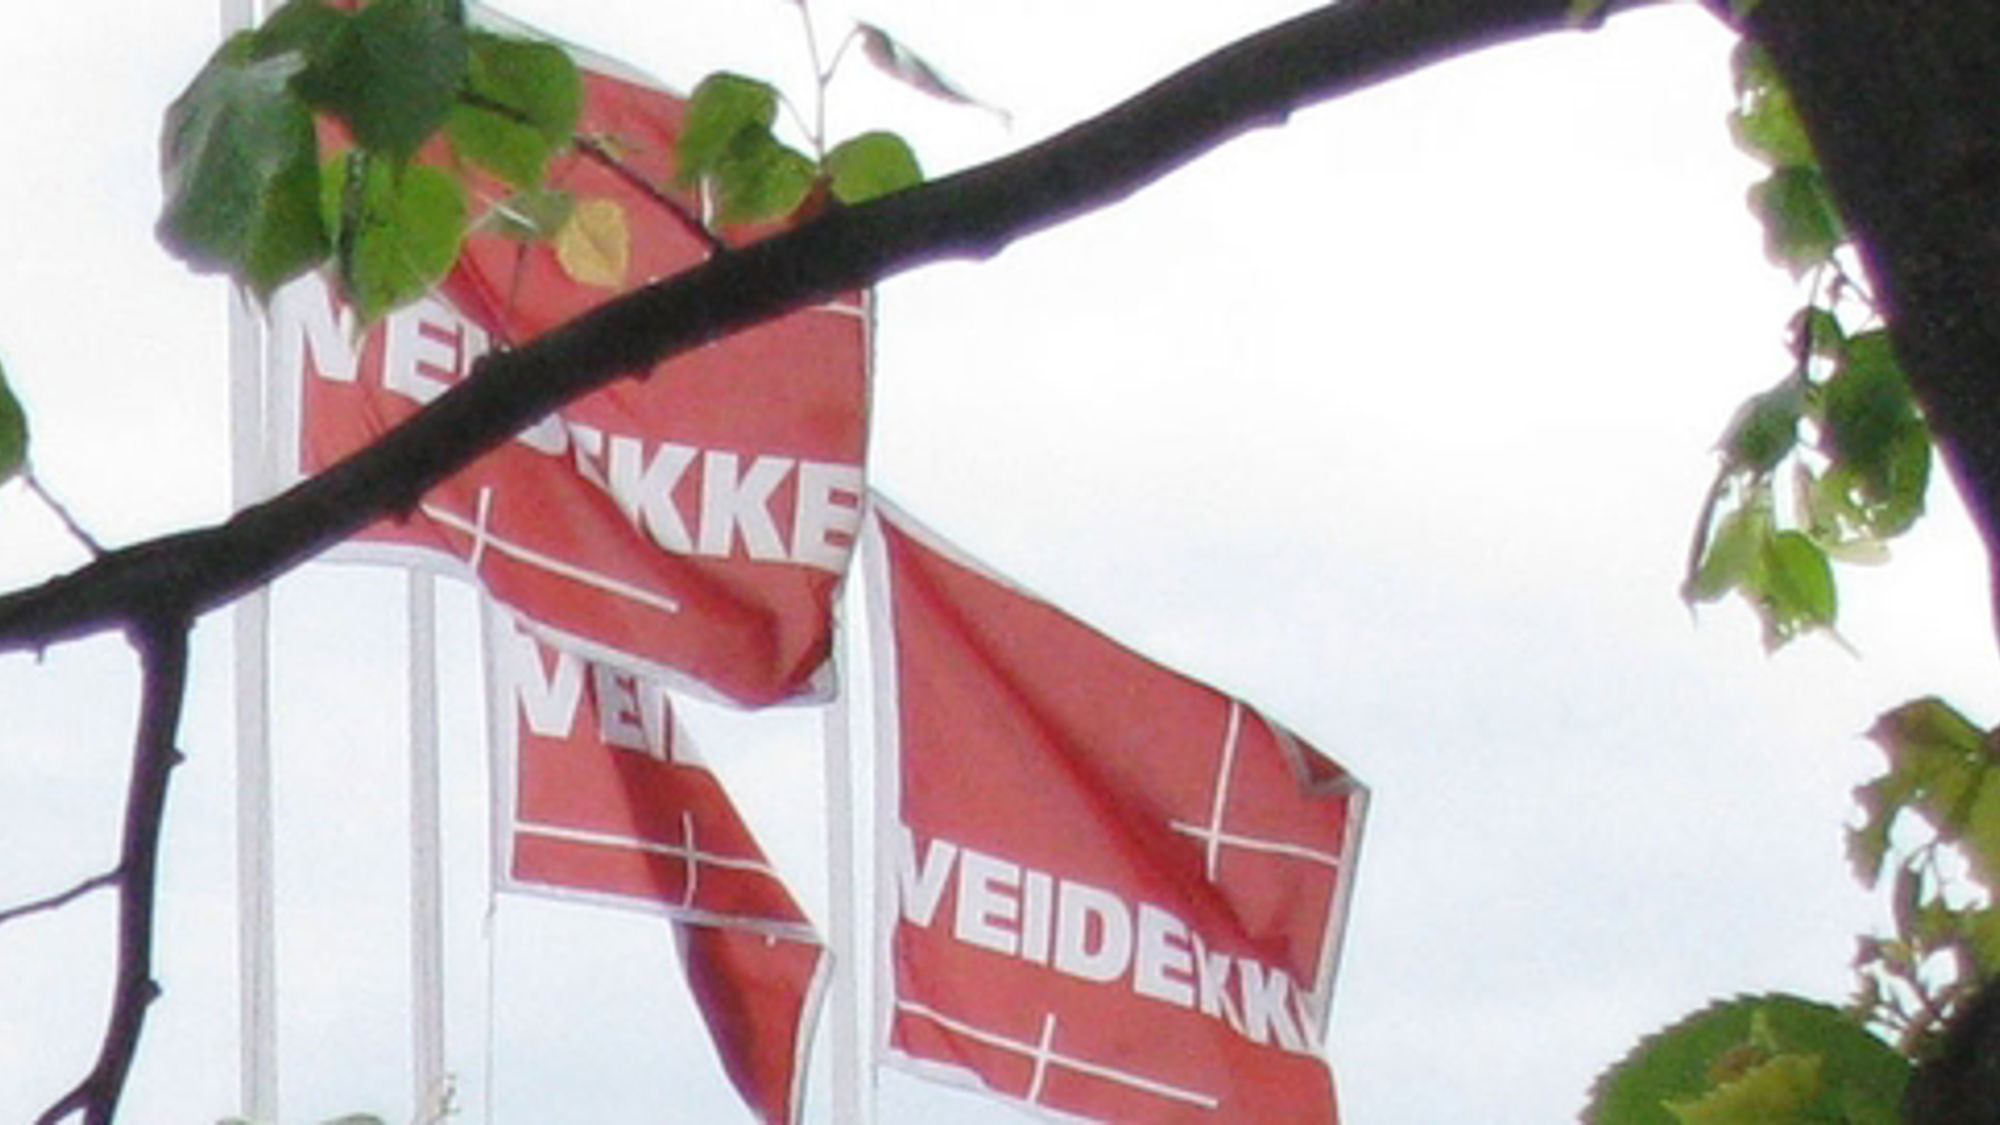 Rikshem och Veidekke bildar nytt bolag